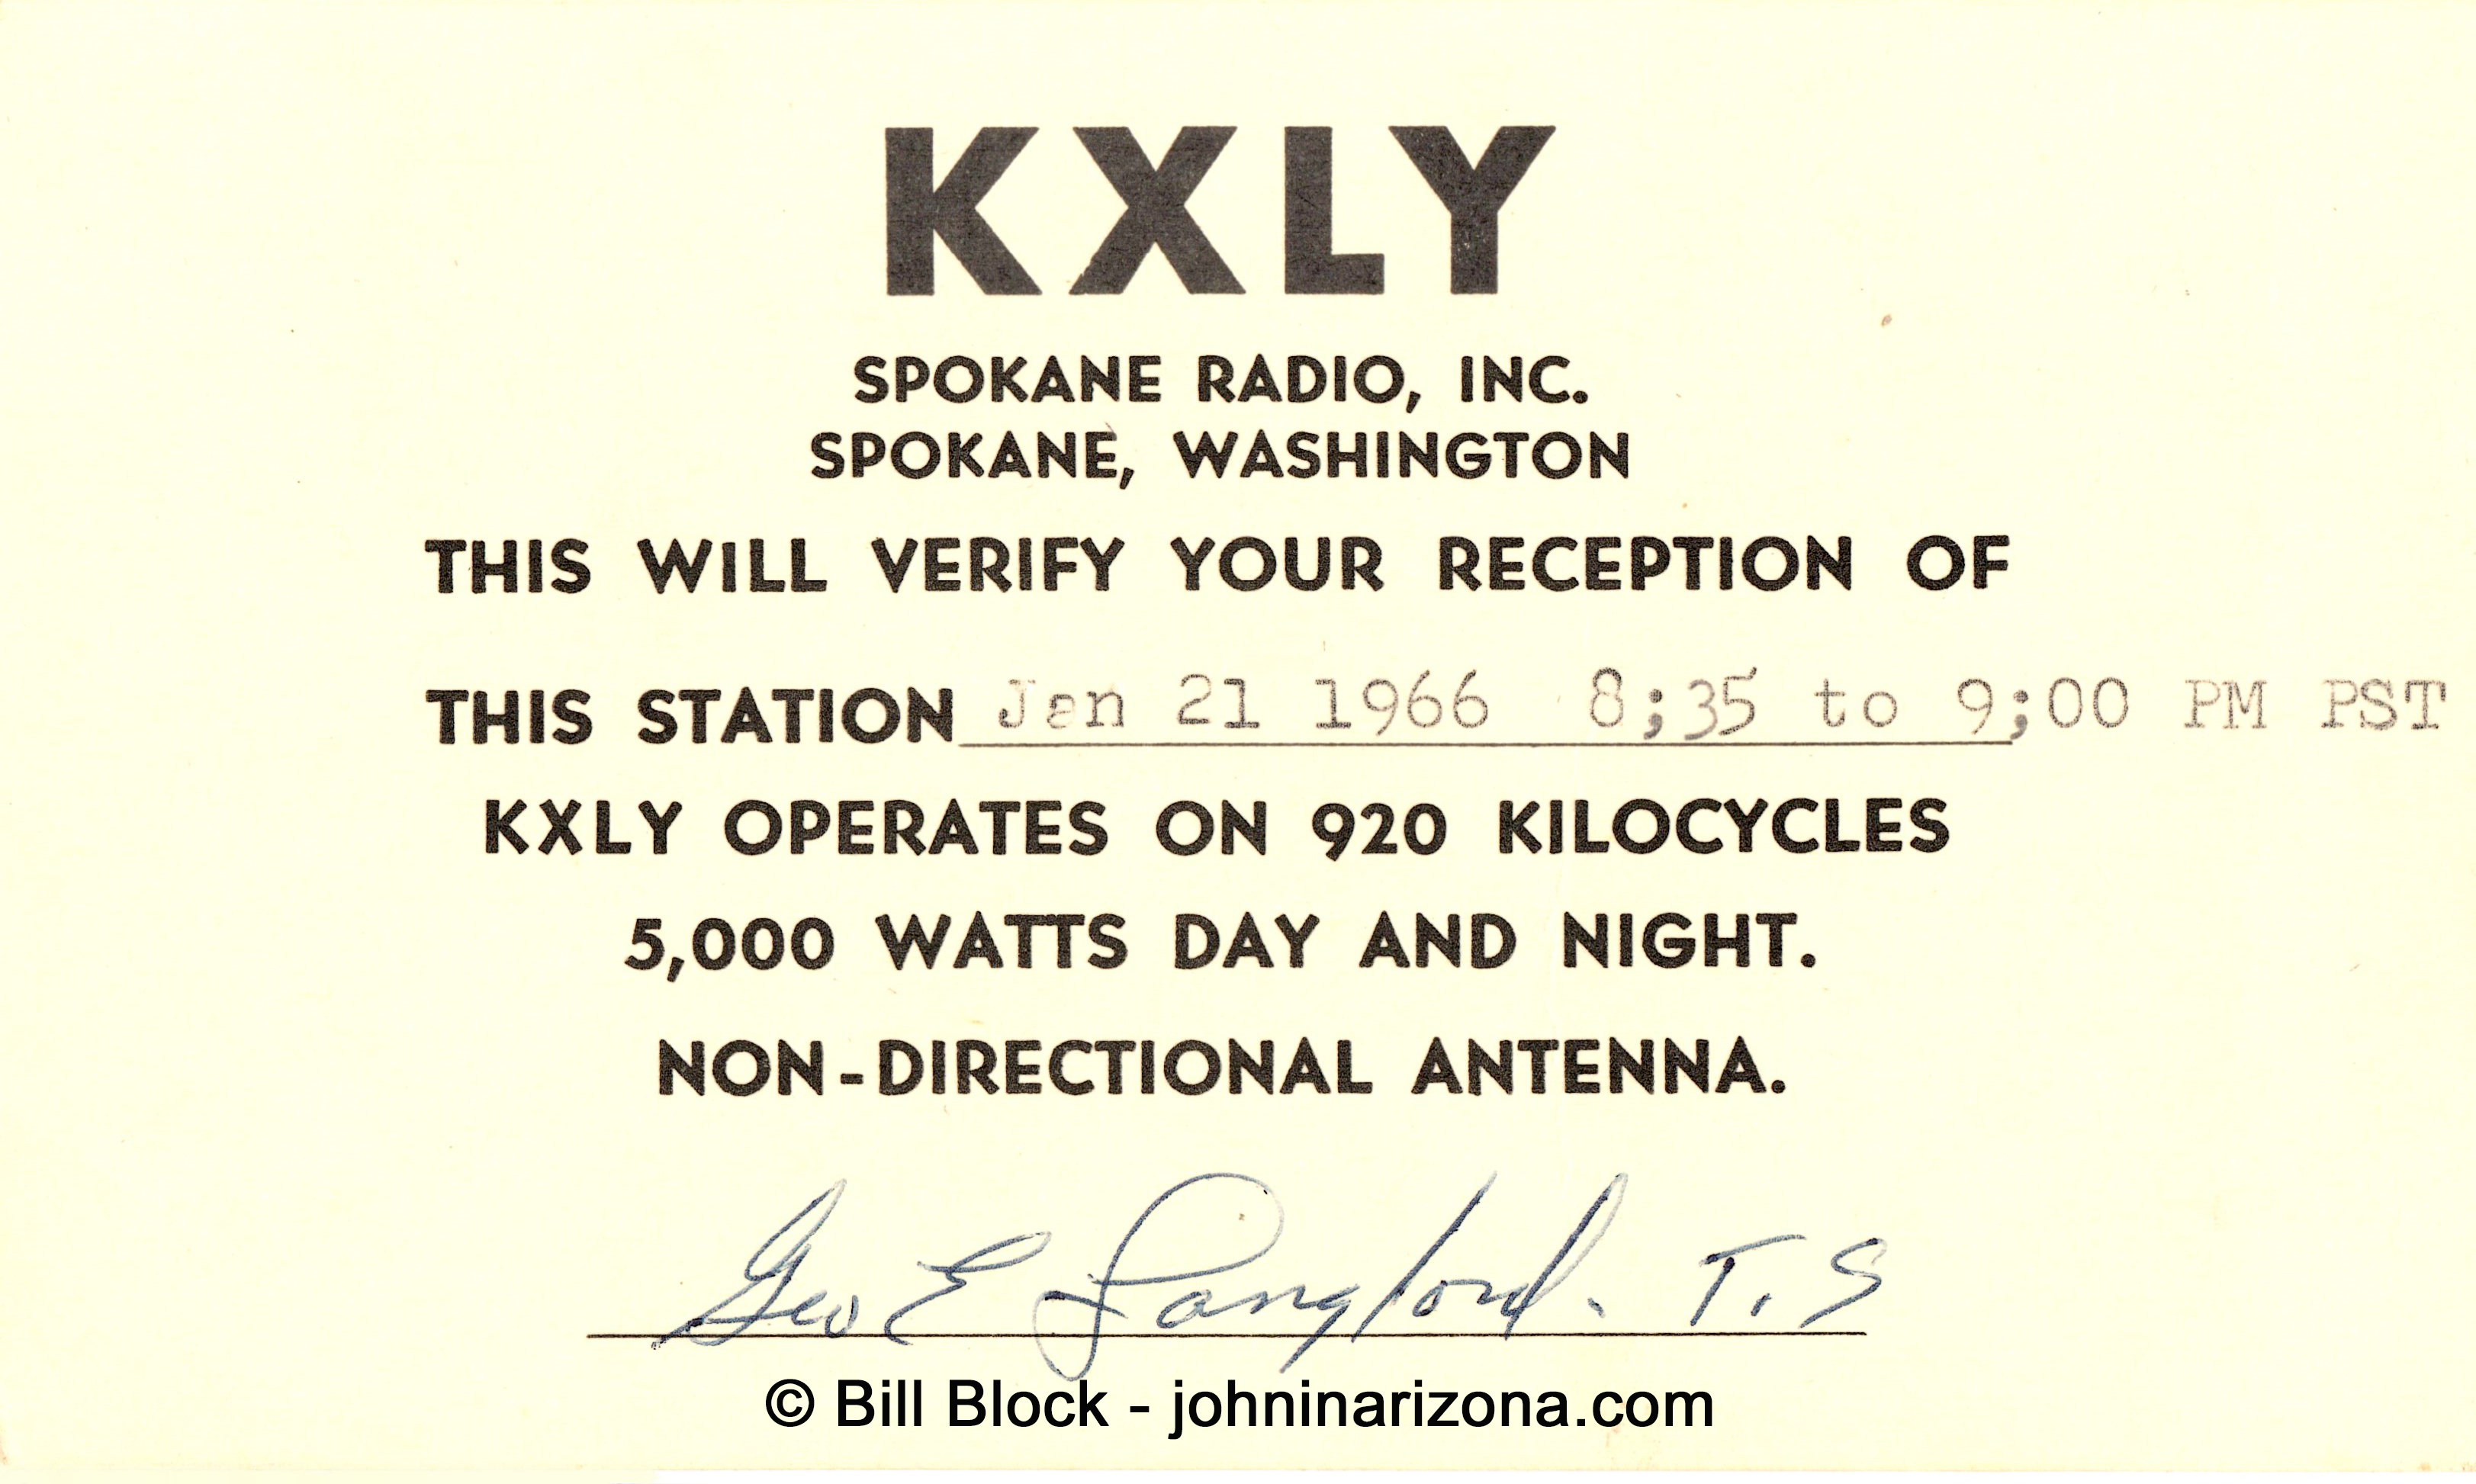 KXLY Radio 920 Spokane, Washington